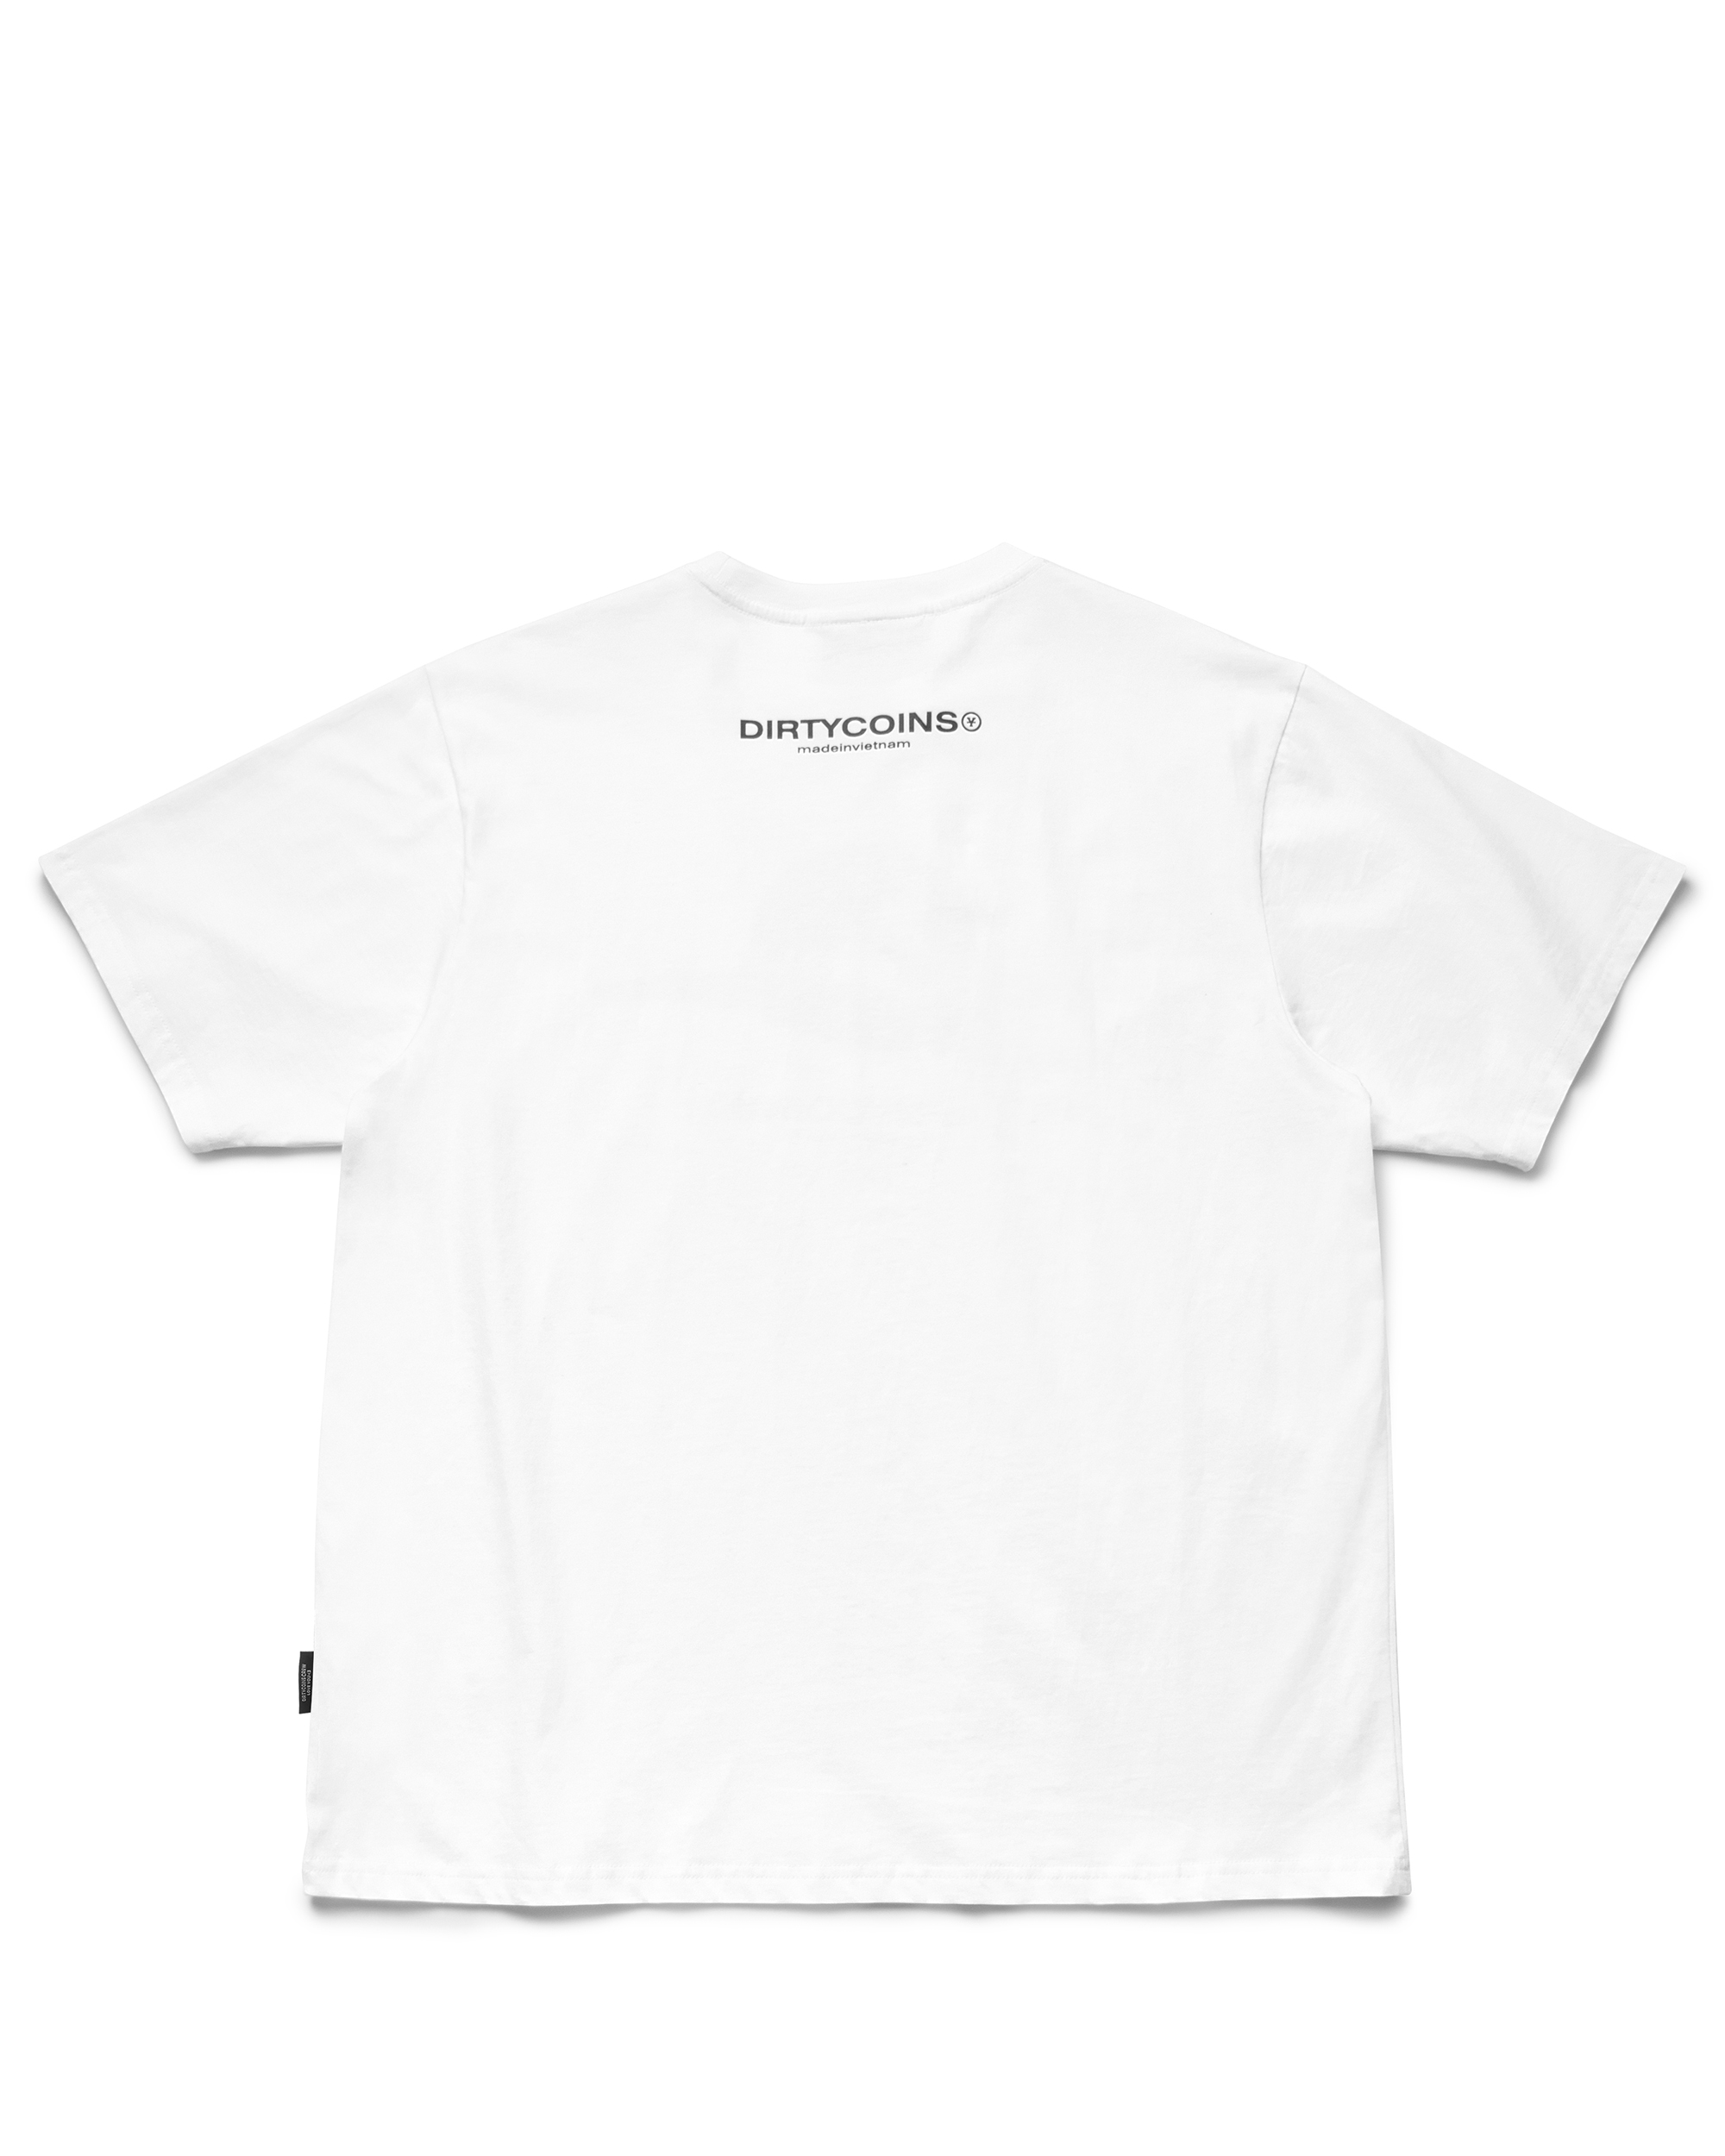 DC x OP Straw Hat T-shirt - White